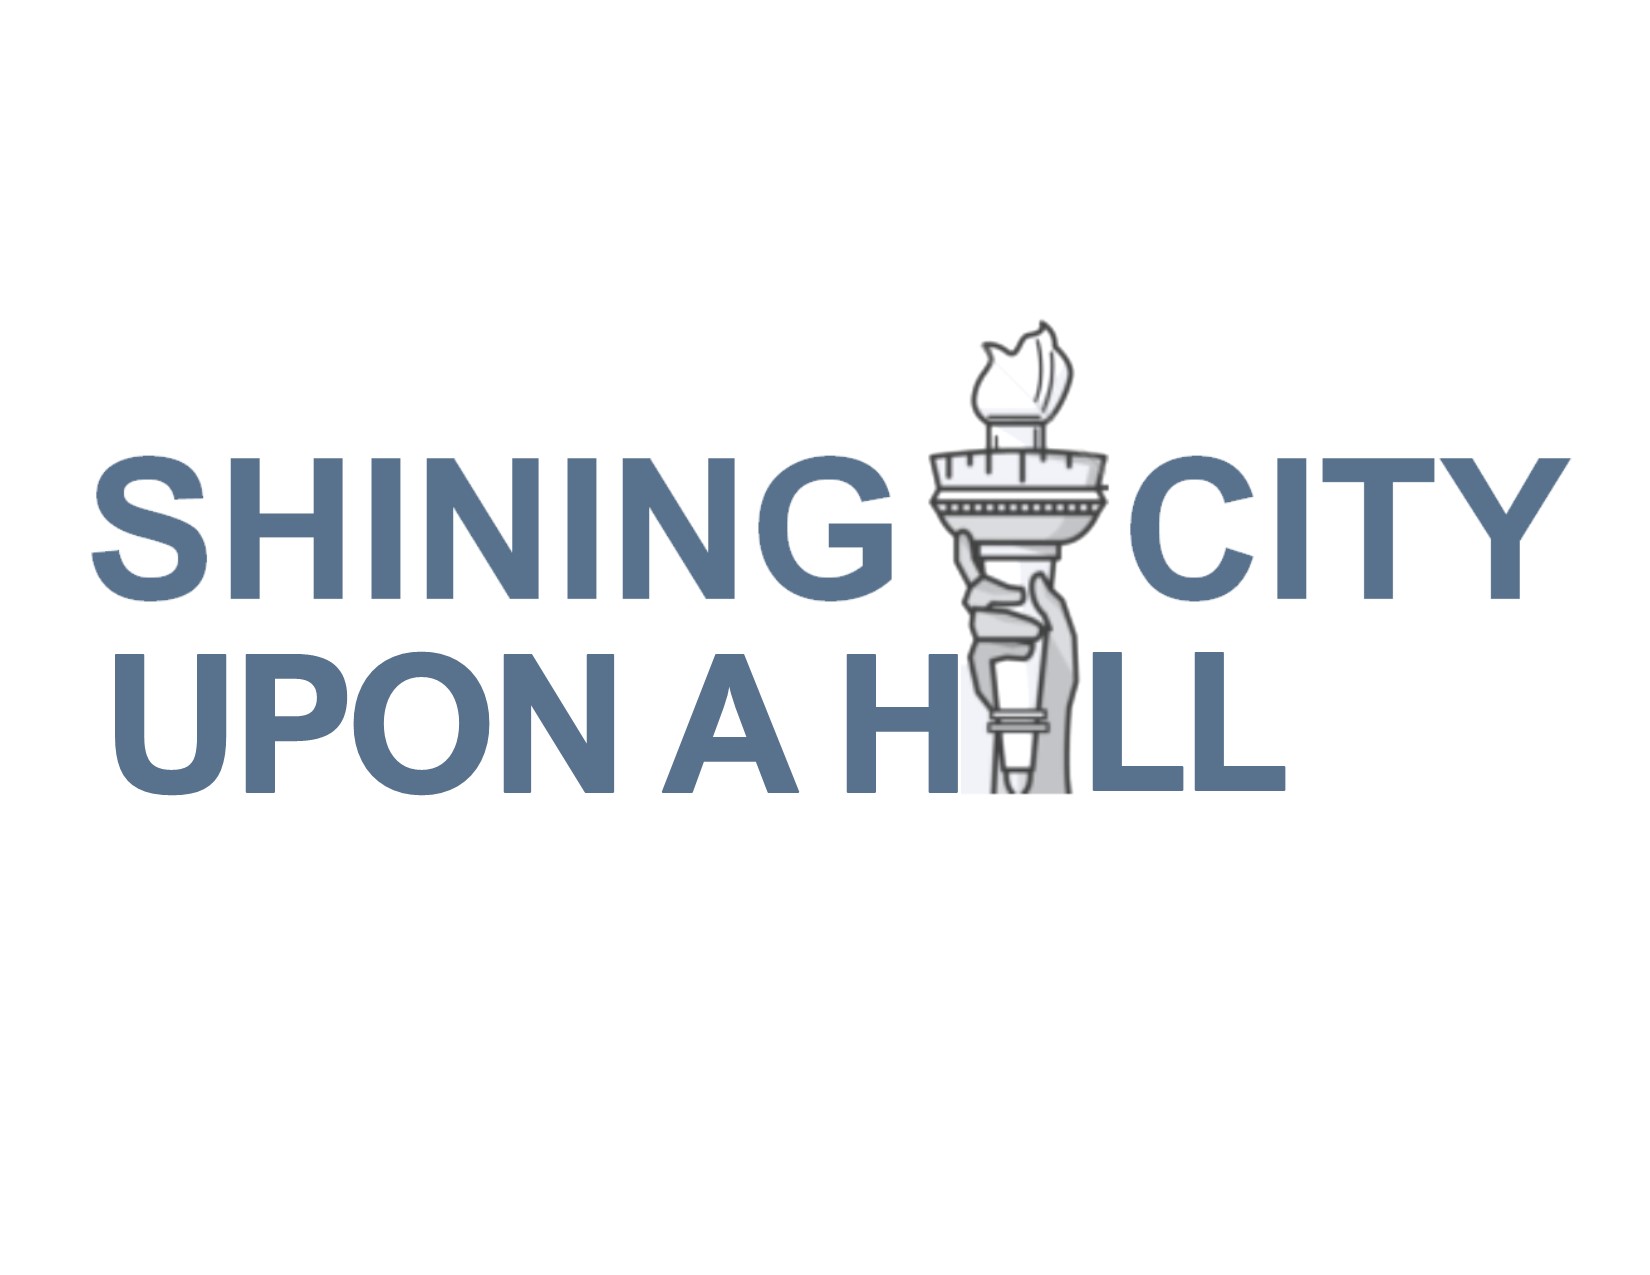 Shining City on a Hill logo